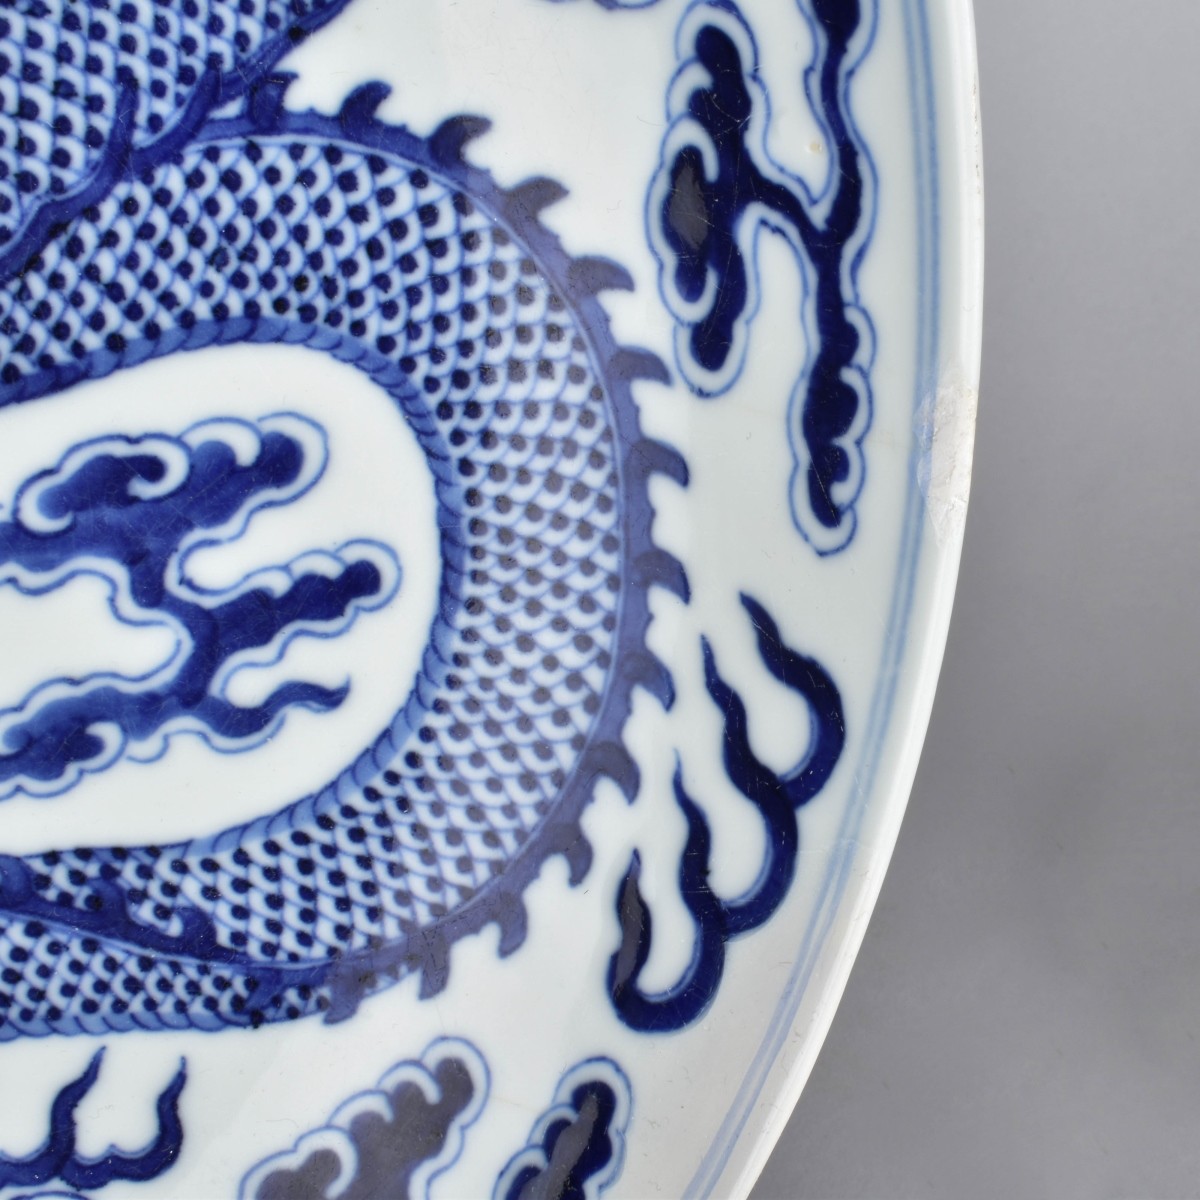 Blue and White "Dragon" Dish Guangxu Mark